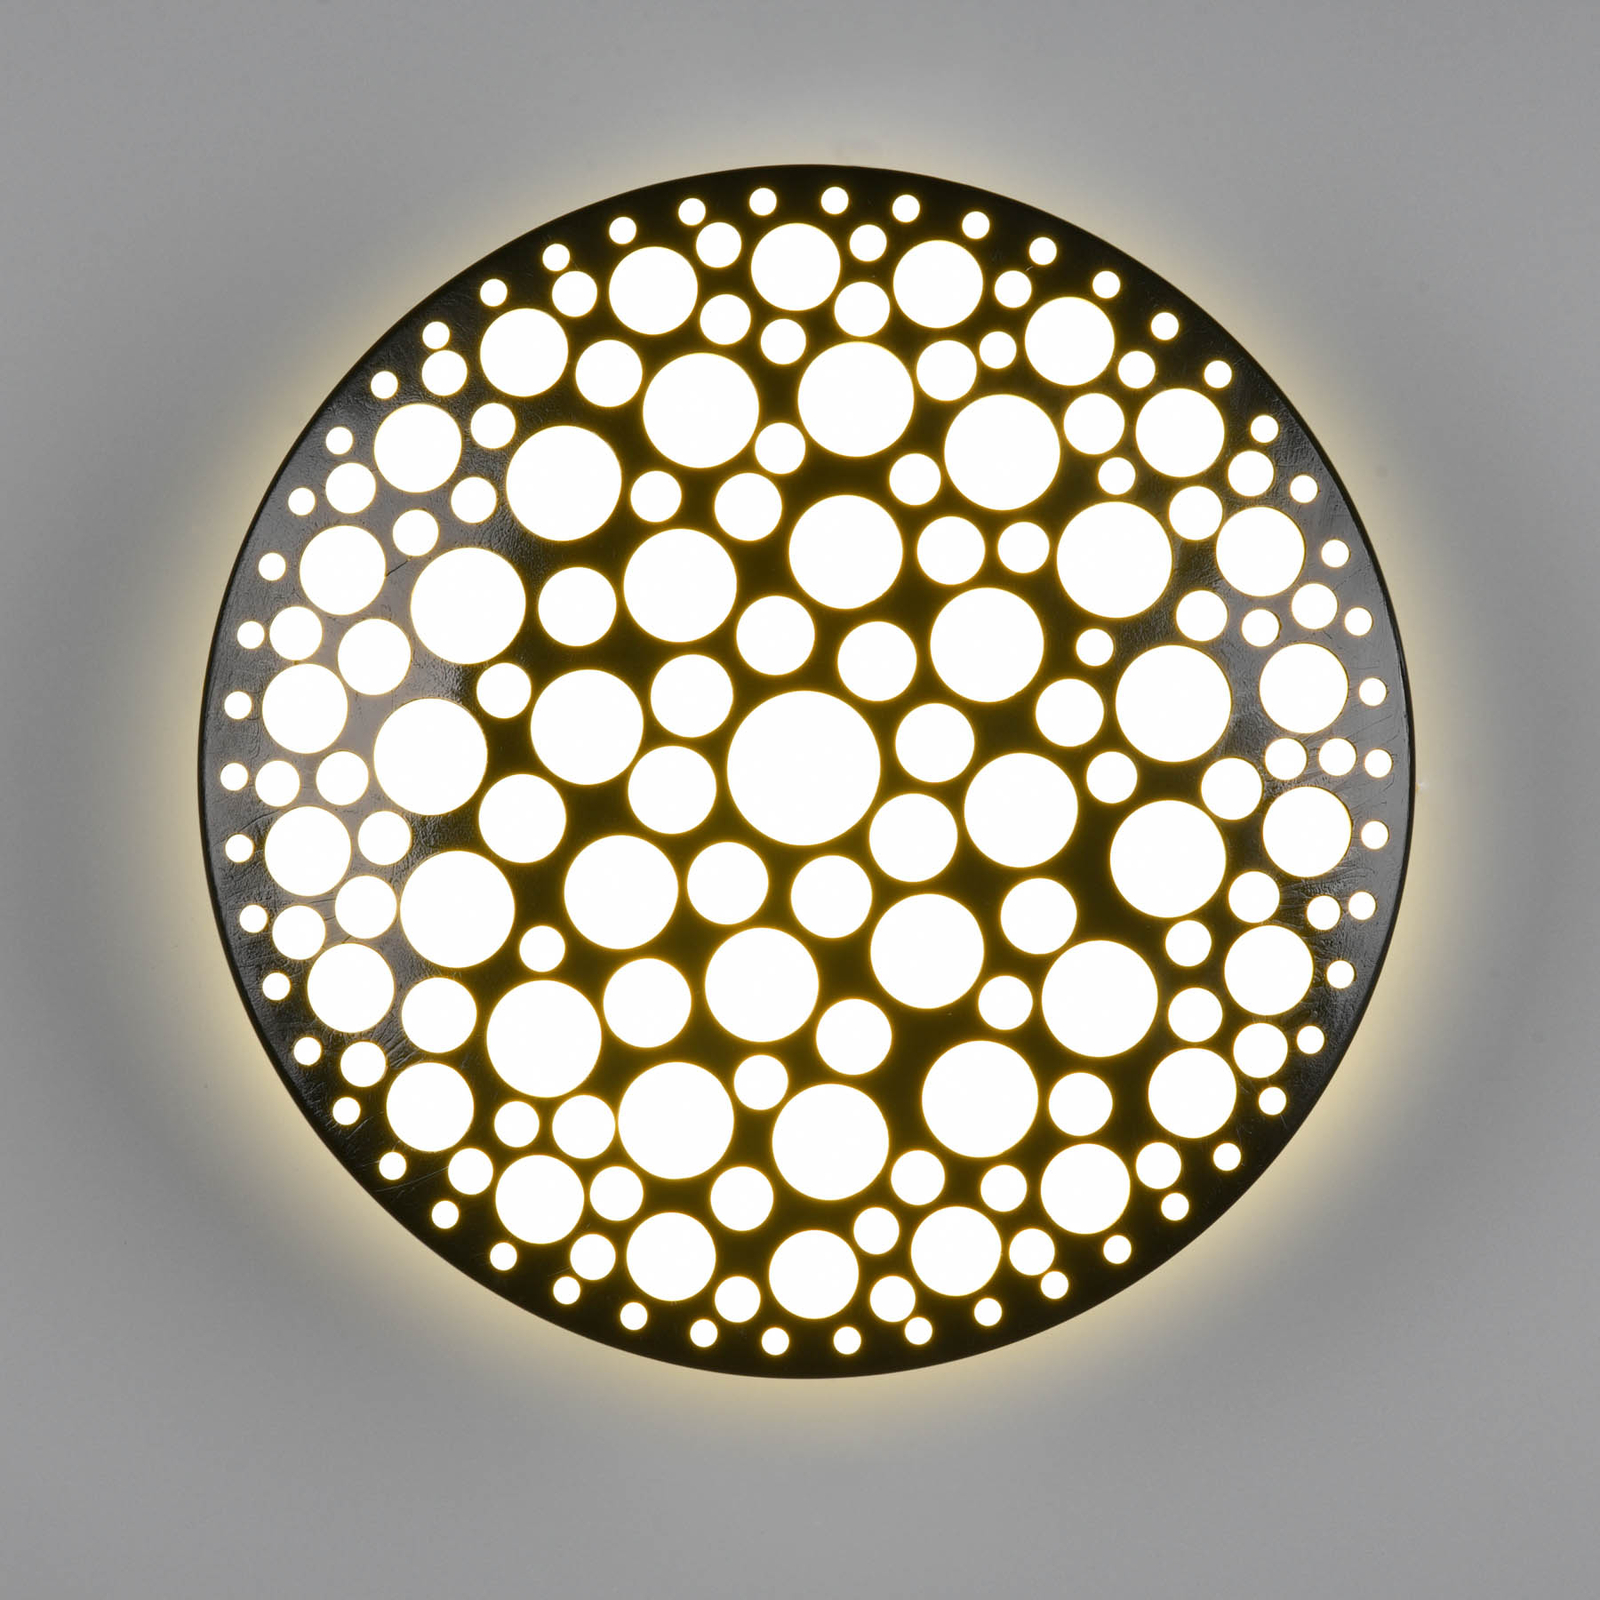 Chizu LED ceiling light, Ø 28.5 cm, 3,000 K black